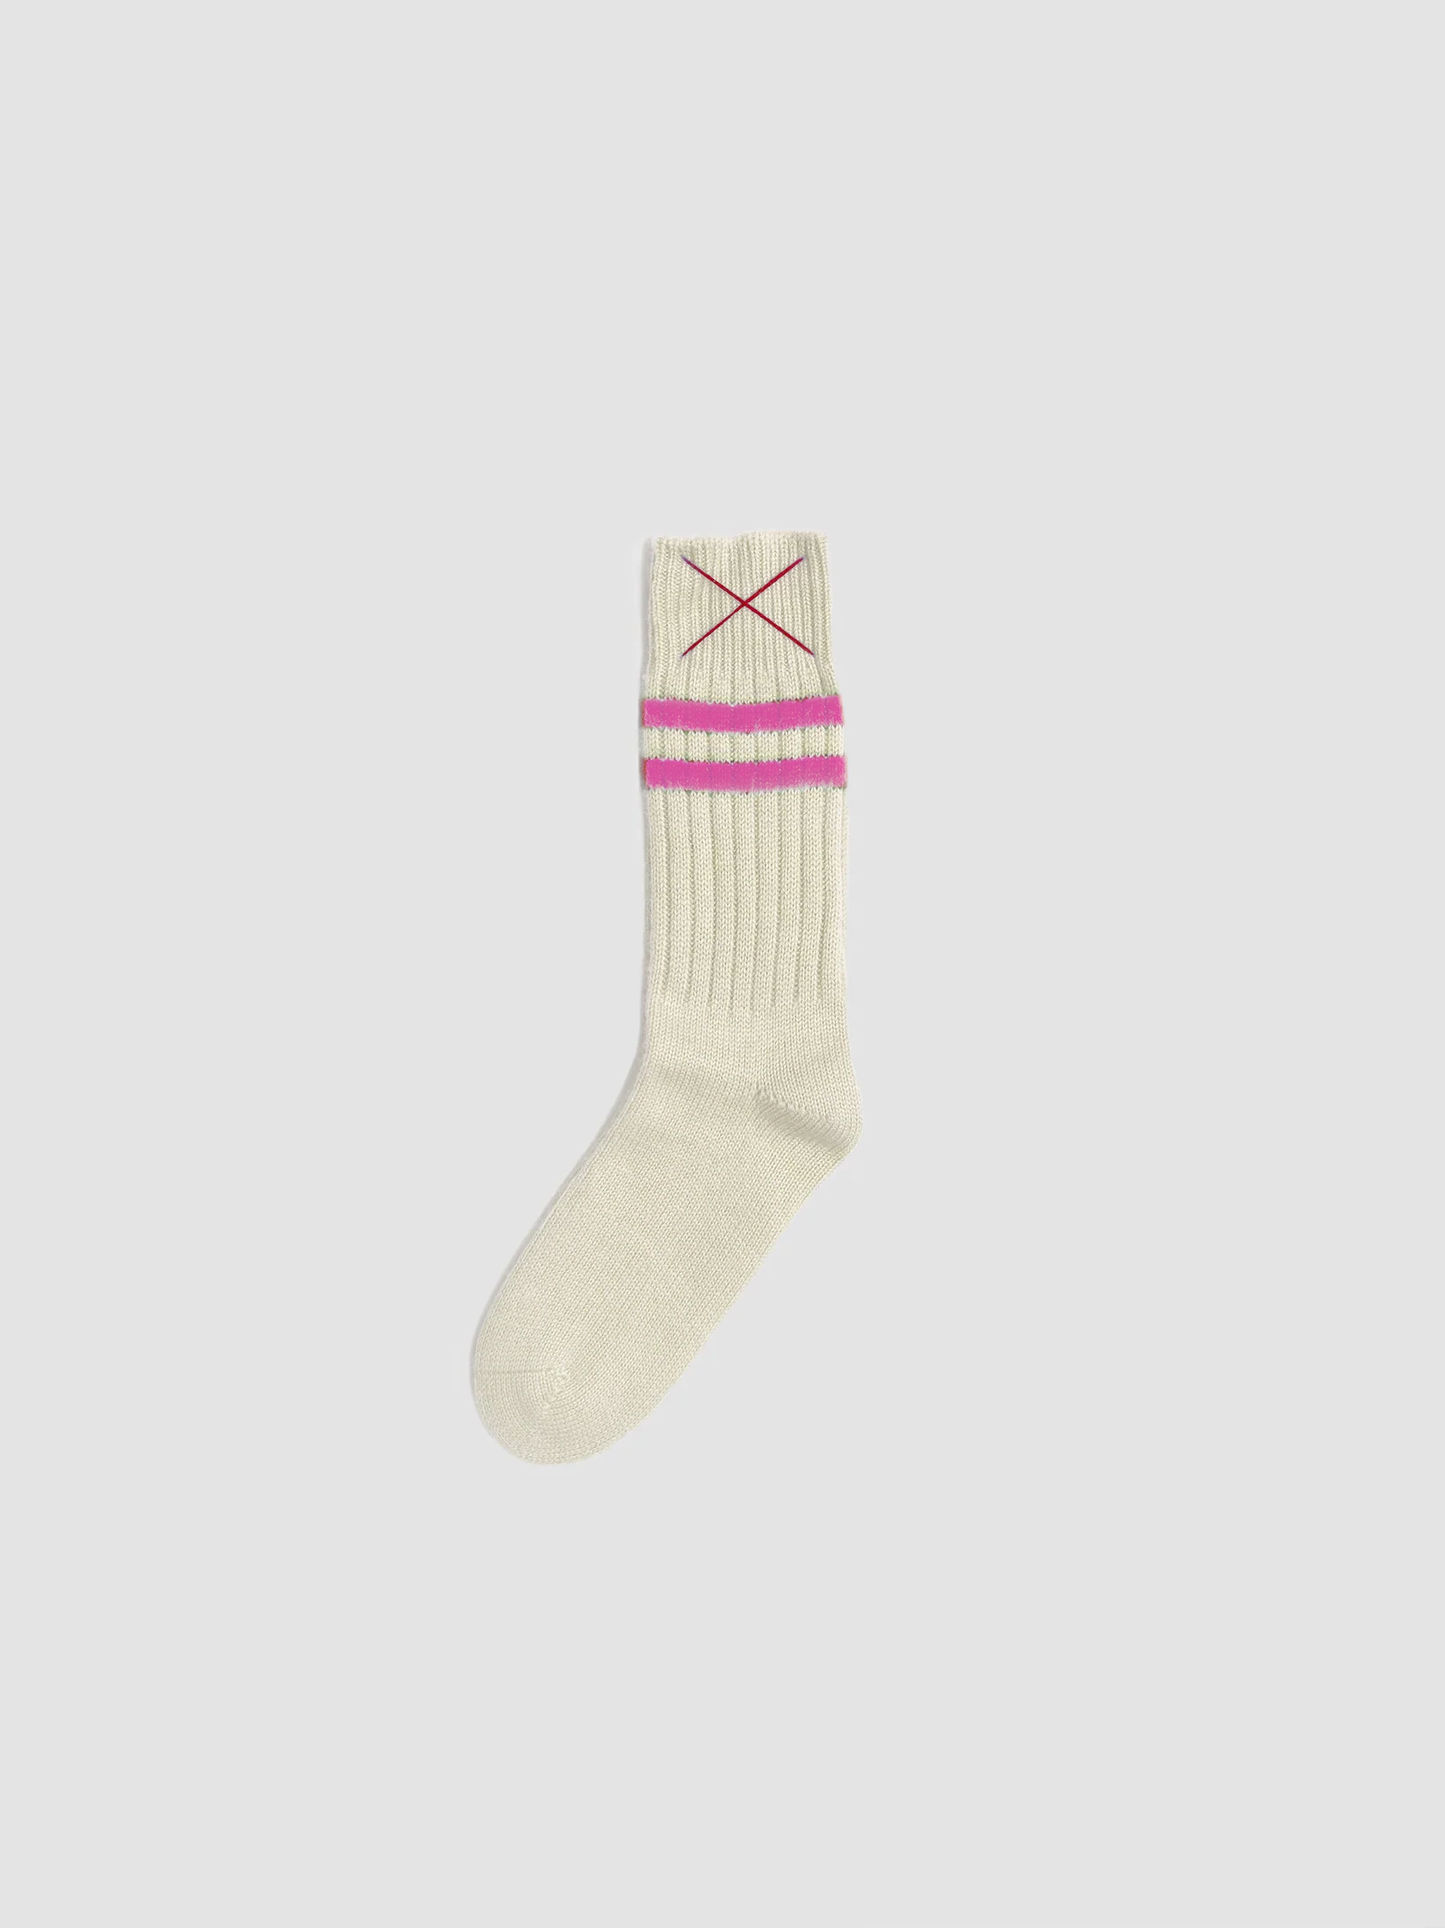 Cashmere Socks Two Stripes OffWhite&Fuchsia